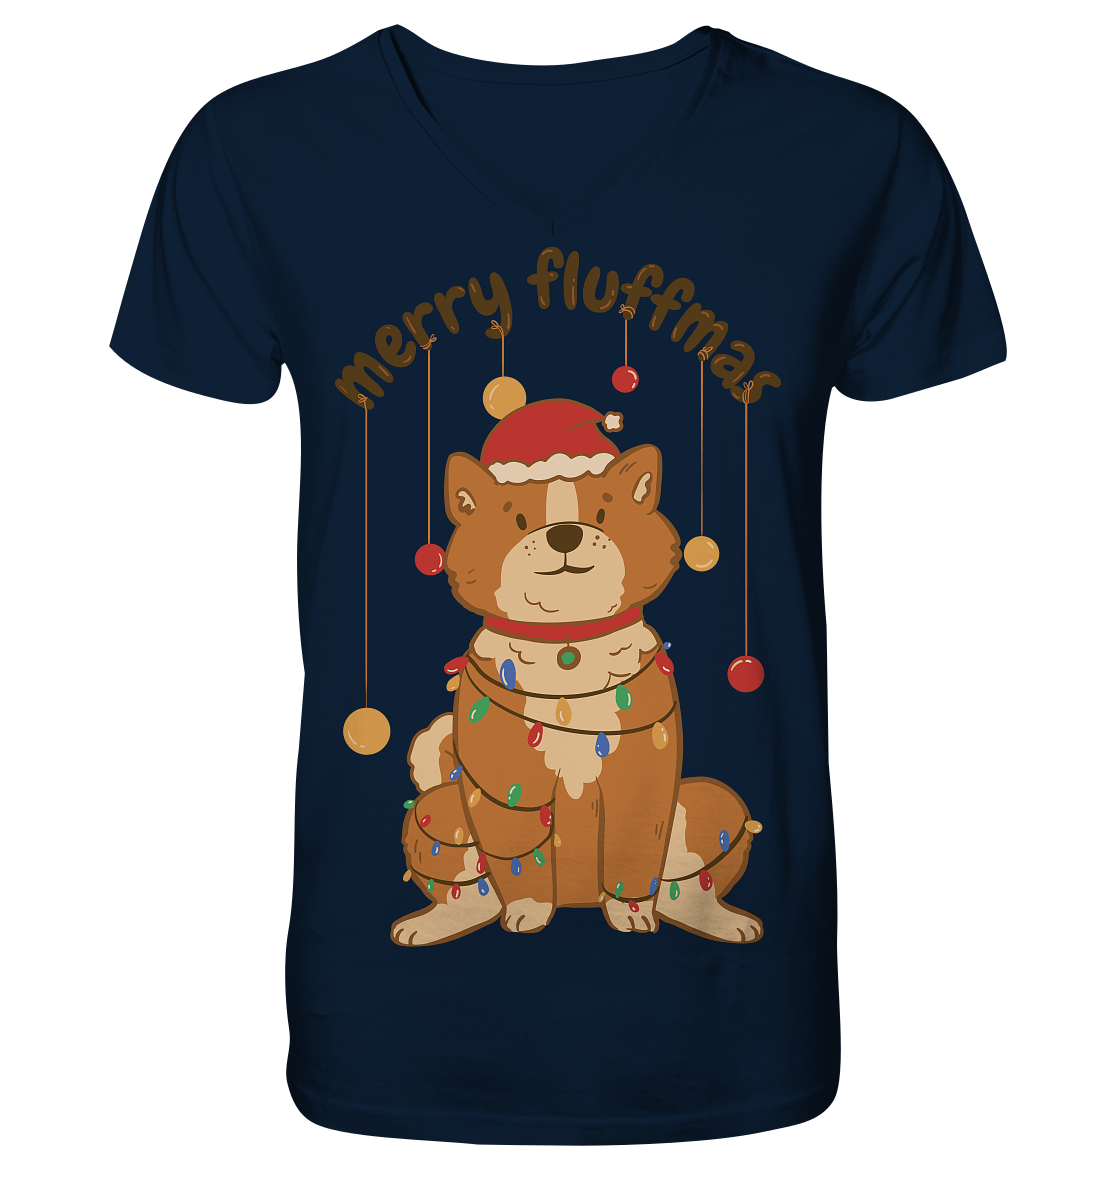 Weihnachtliches Motiv Fun Merry Fluffmas - V-Neck Shirt